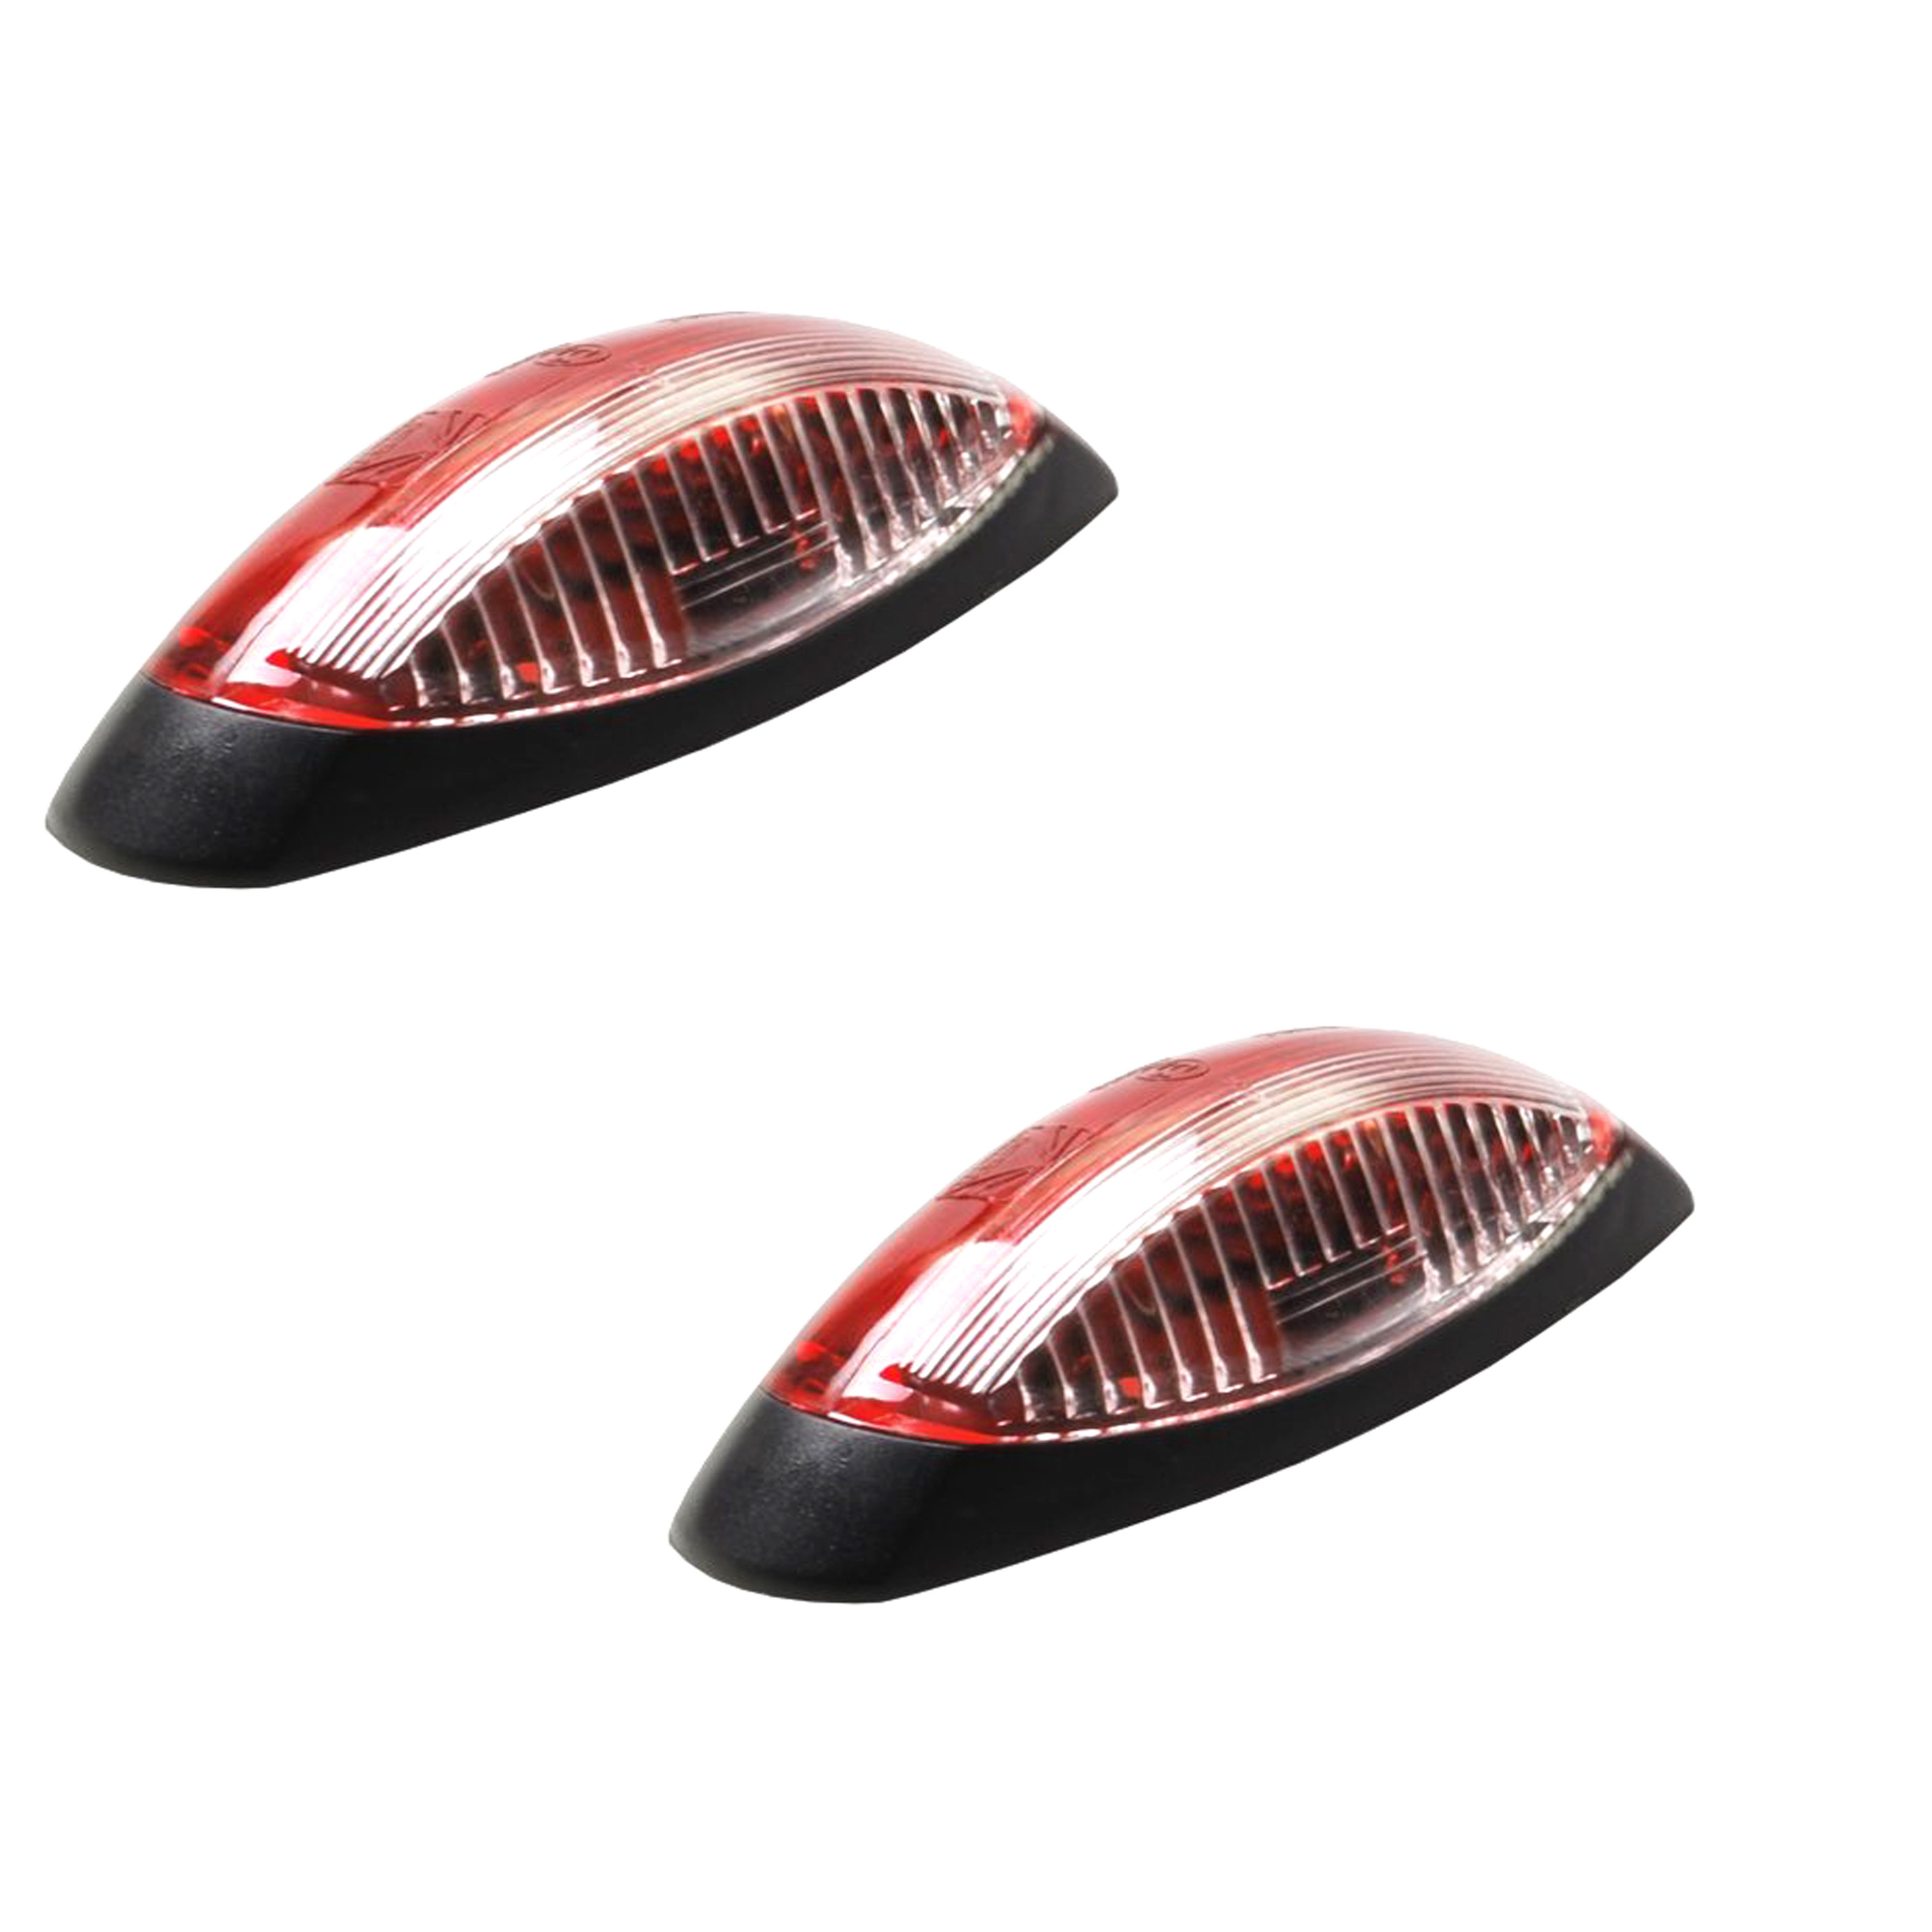 Aspöck Anhänger-Rückleuchte Flexipoint / Weiß - Rot - Oval, Weiß Umrißleuchte Rot Leuchtmittel, ohne Positionsleuchte